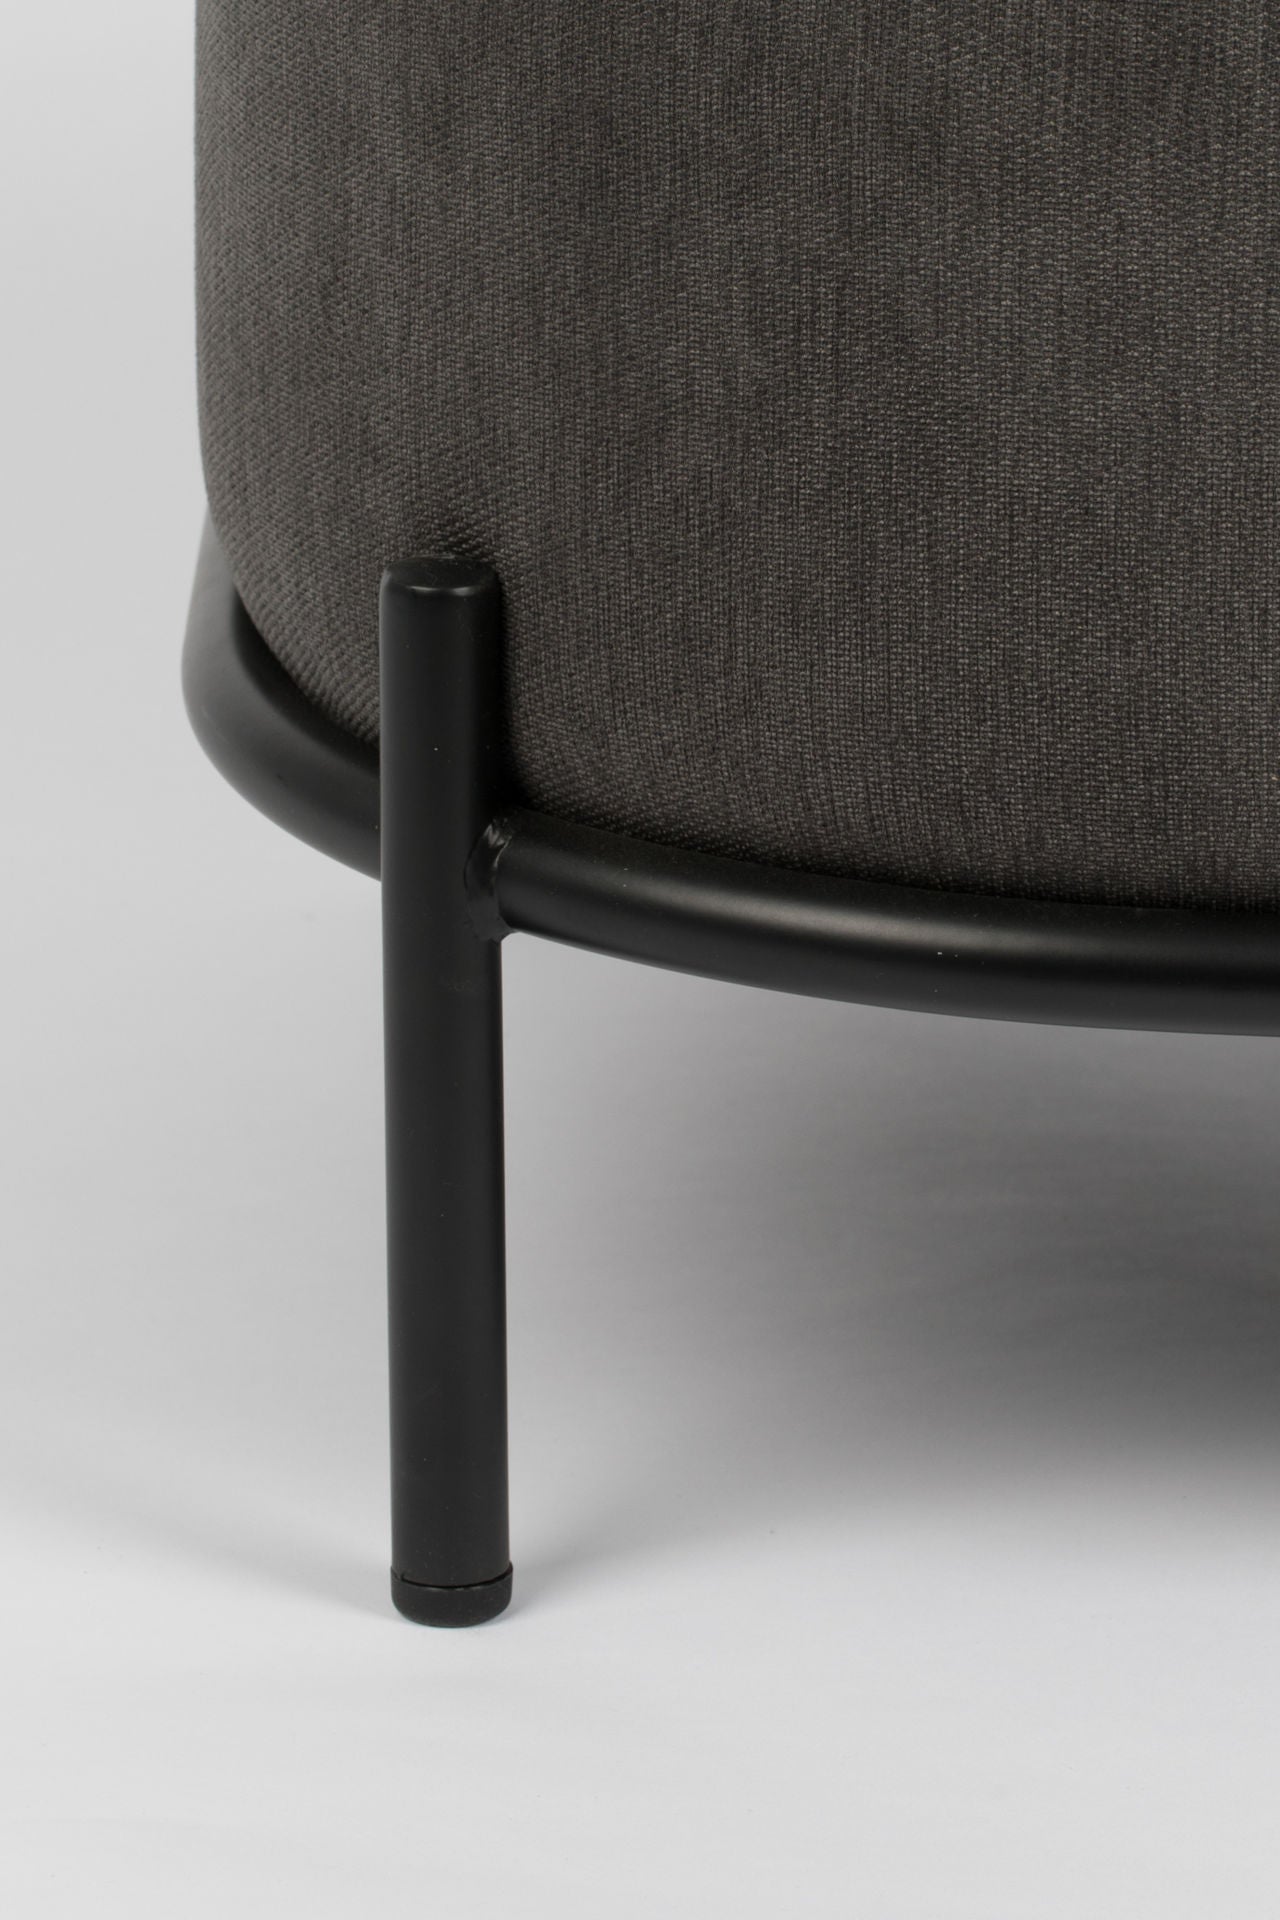 Nancy's Viera East Lounge Chair - Modern - Gray - Polyester, Plywood, Iron - 71.5 cm x 66 cm x 77 cm